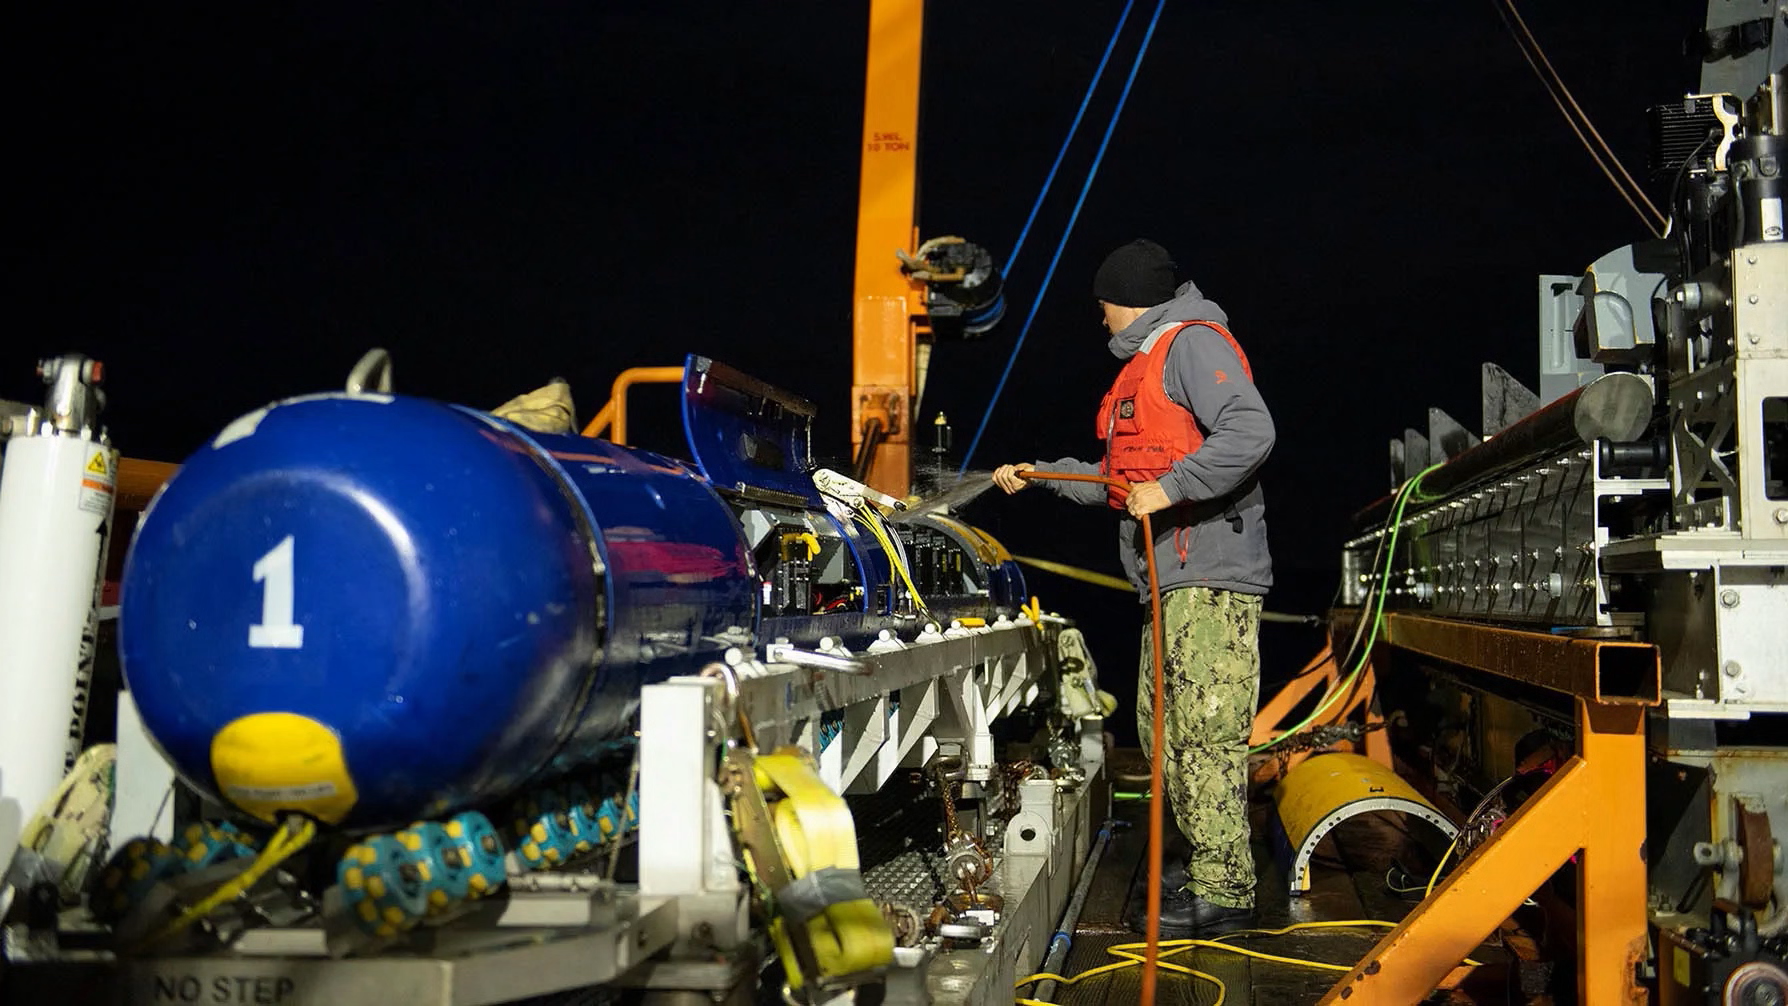 Knifefish surface mine countermeasure unmanned underwater vehicle (SMCM UUV)